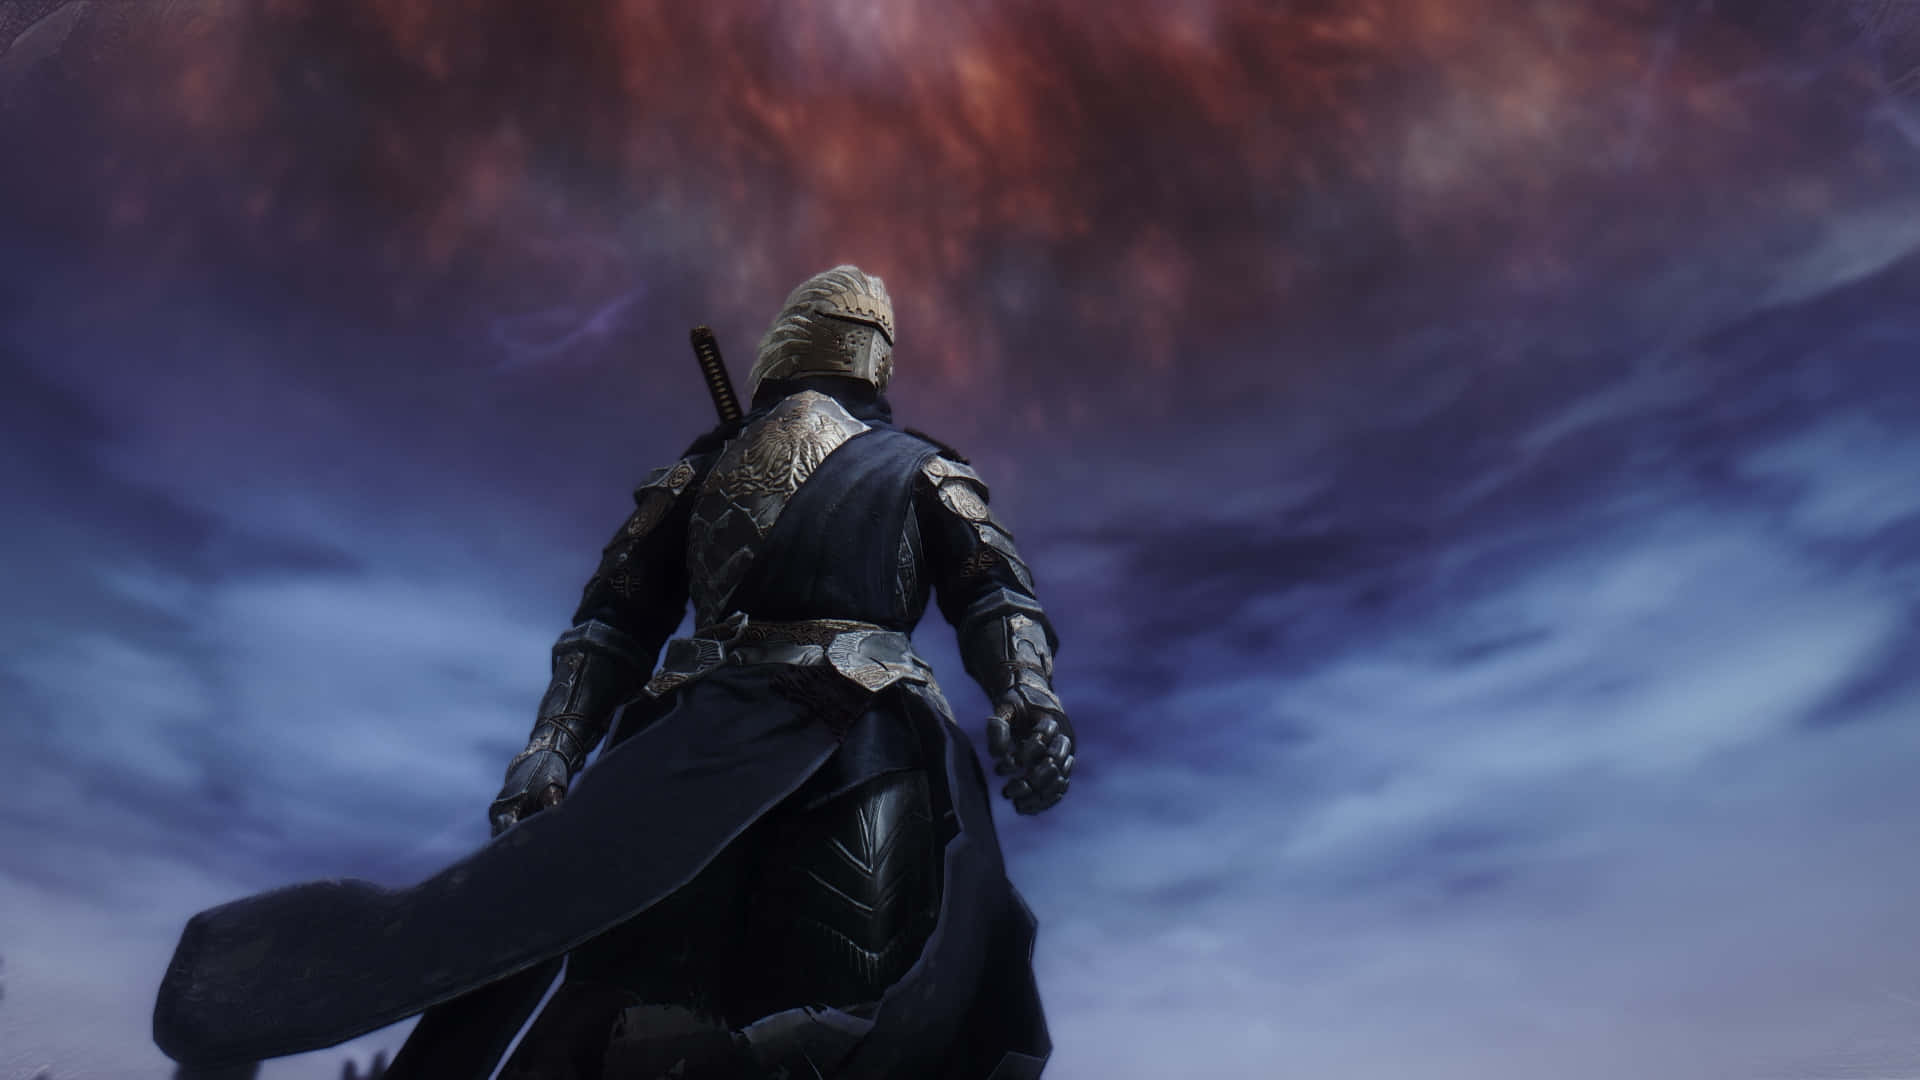 Dovahkiin, The Dragonborn Warrior, Ready For Battle In The World Of Skyrim.